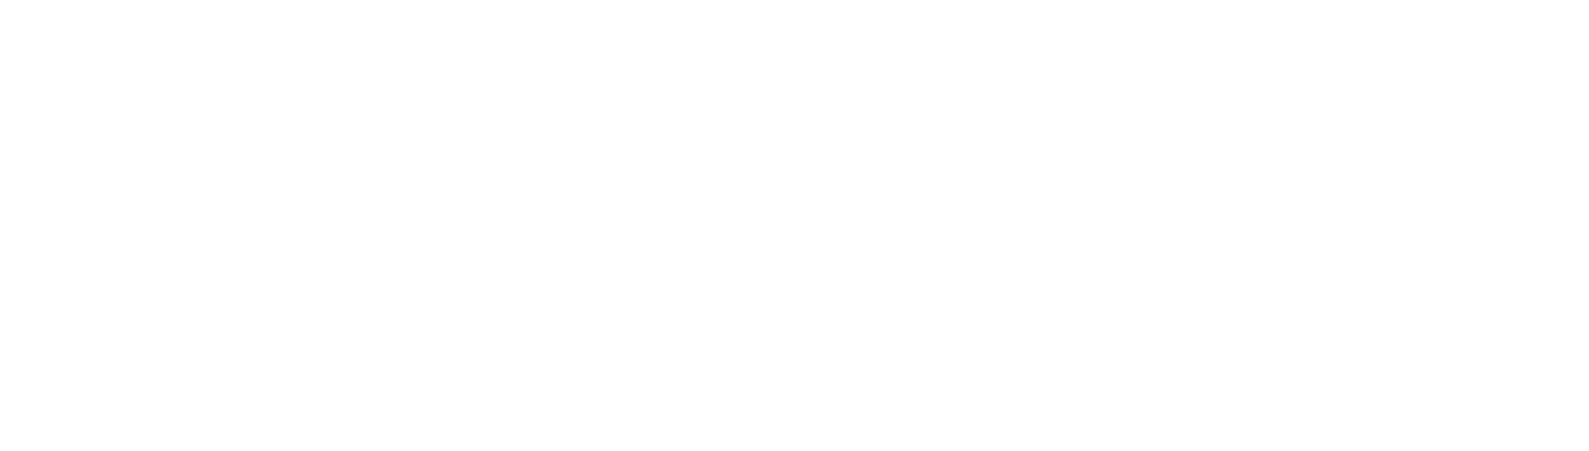 Healthcare Realty Logo groß für dunkle Hintergründe (transparentes PNG)